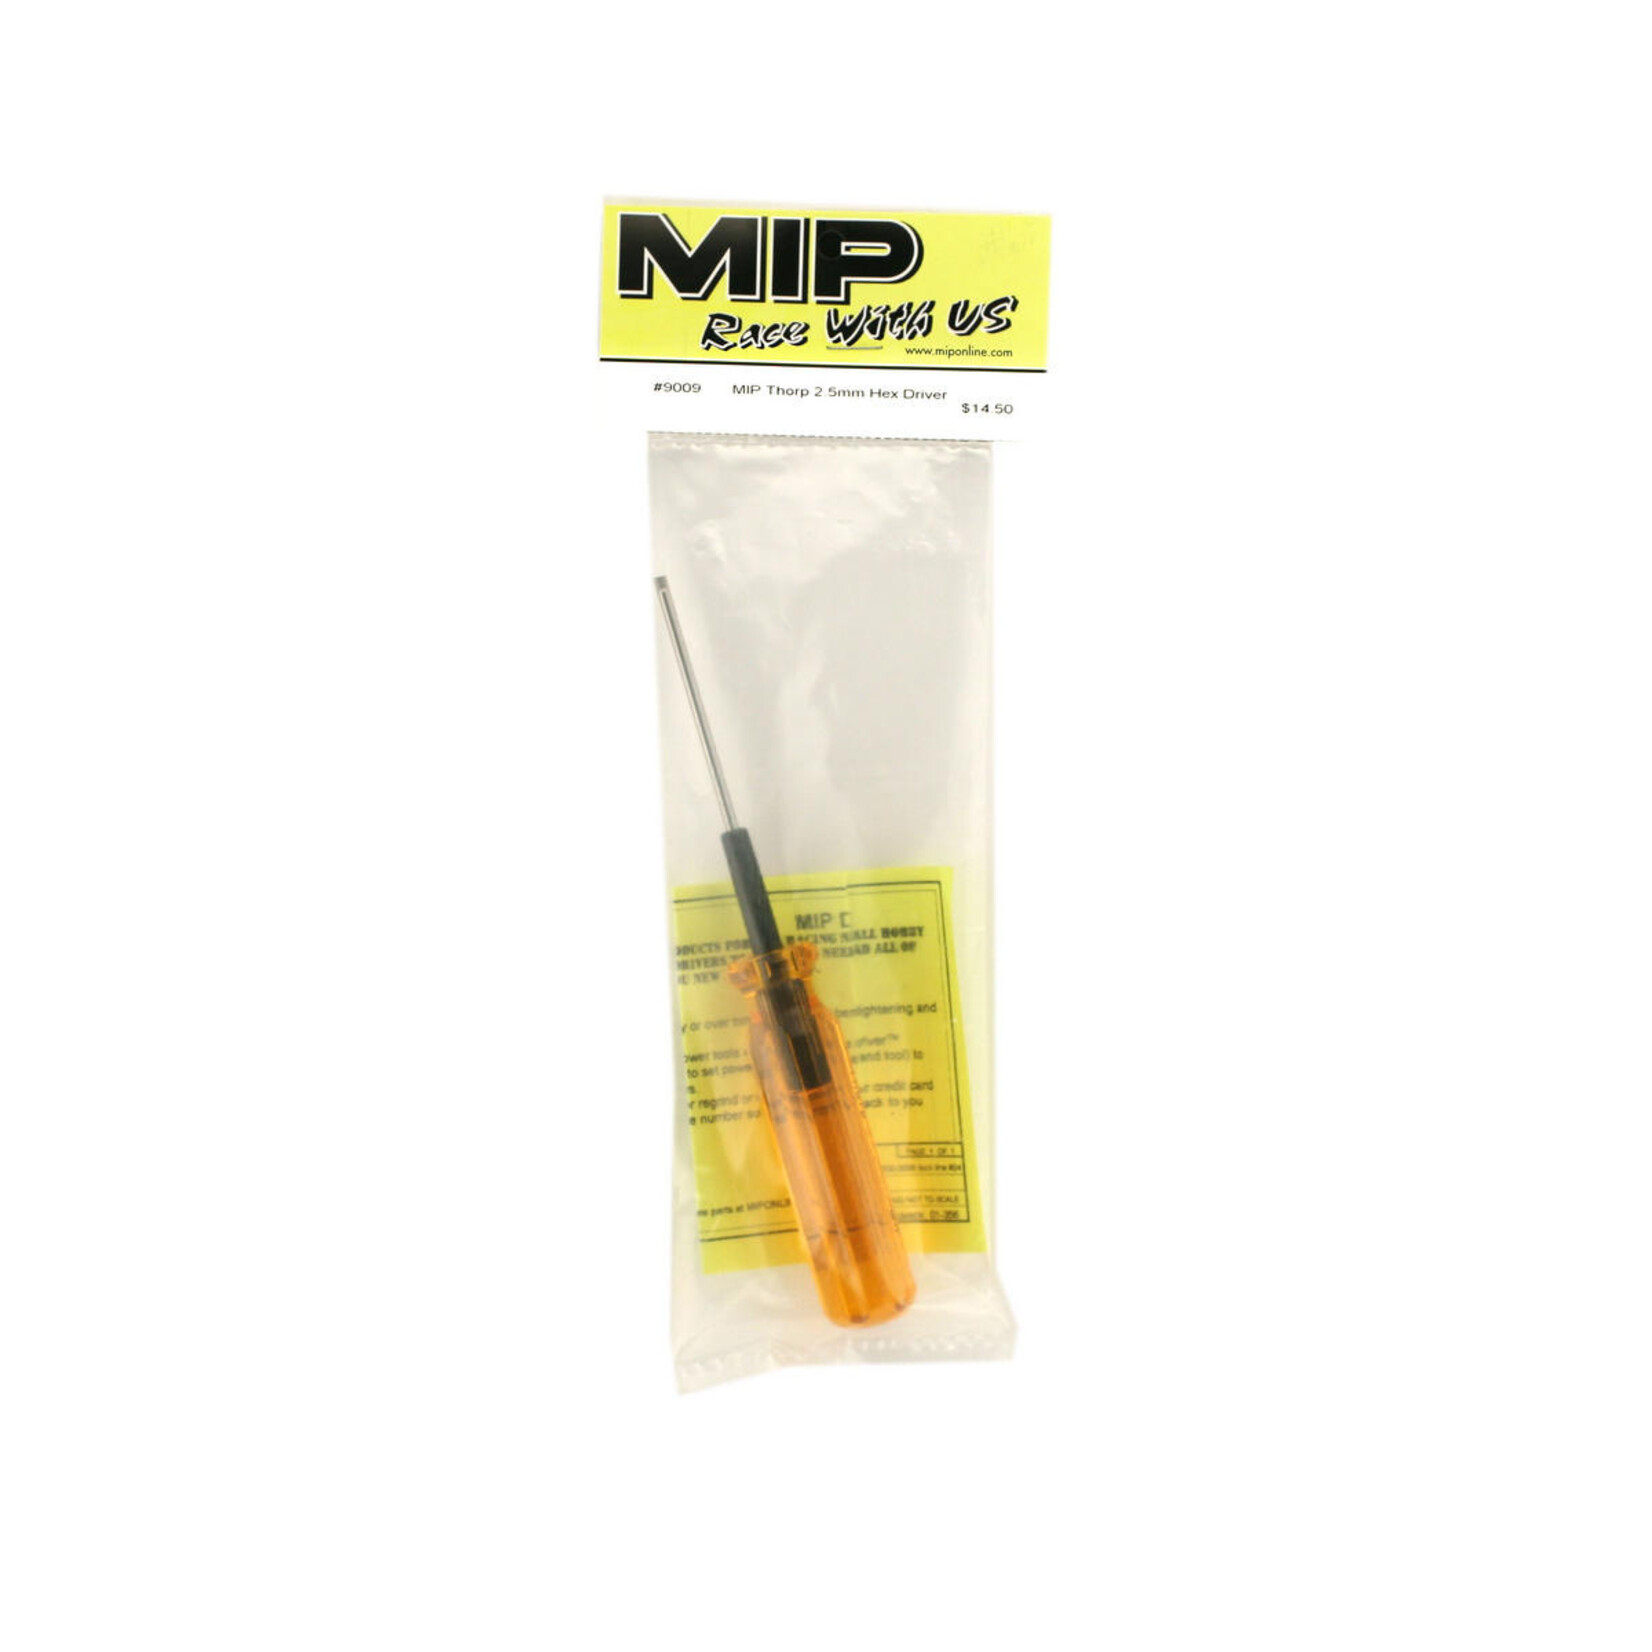 MIP MIP Thorp Hex Driver (2.5mm) #9009